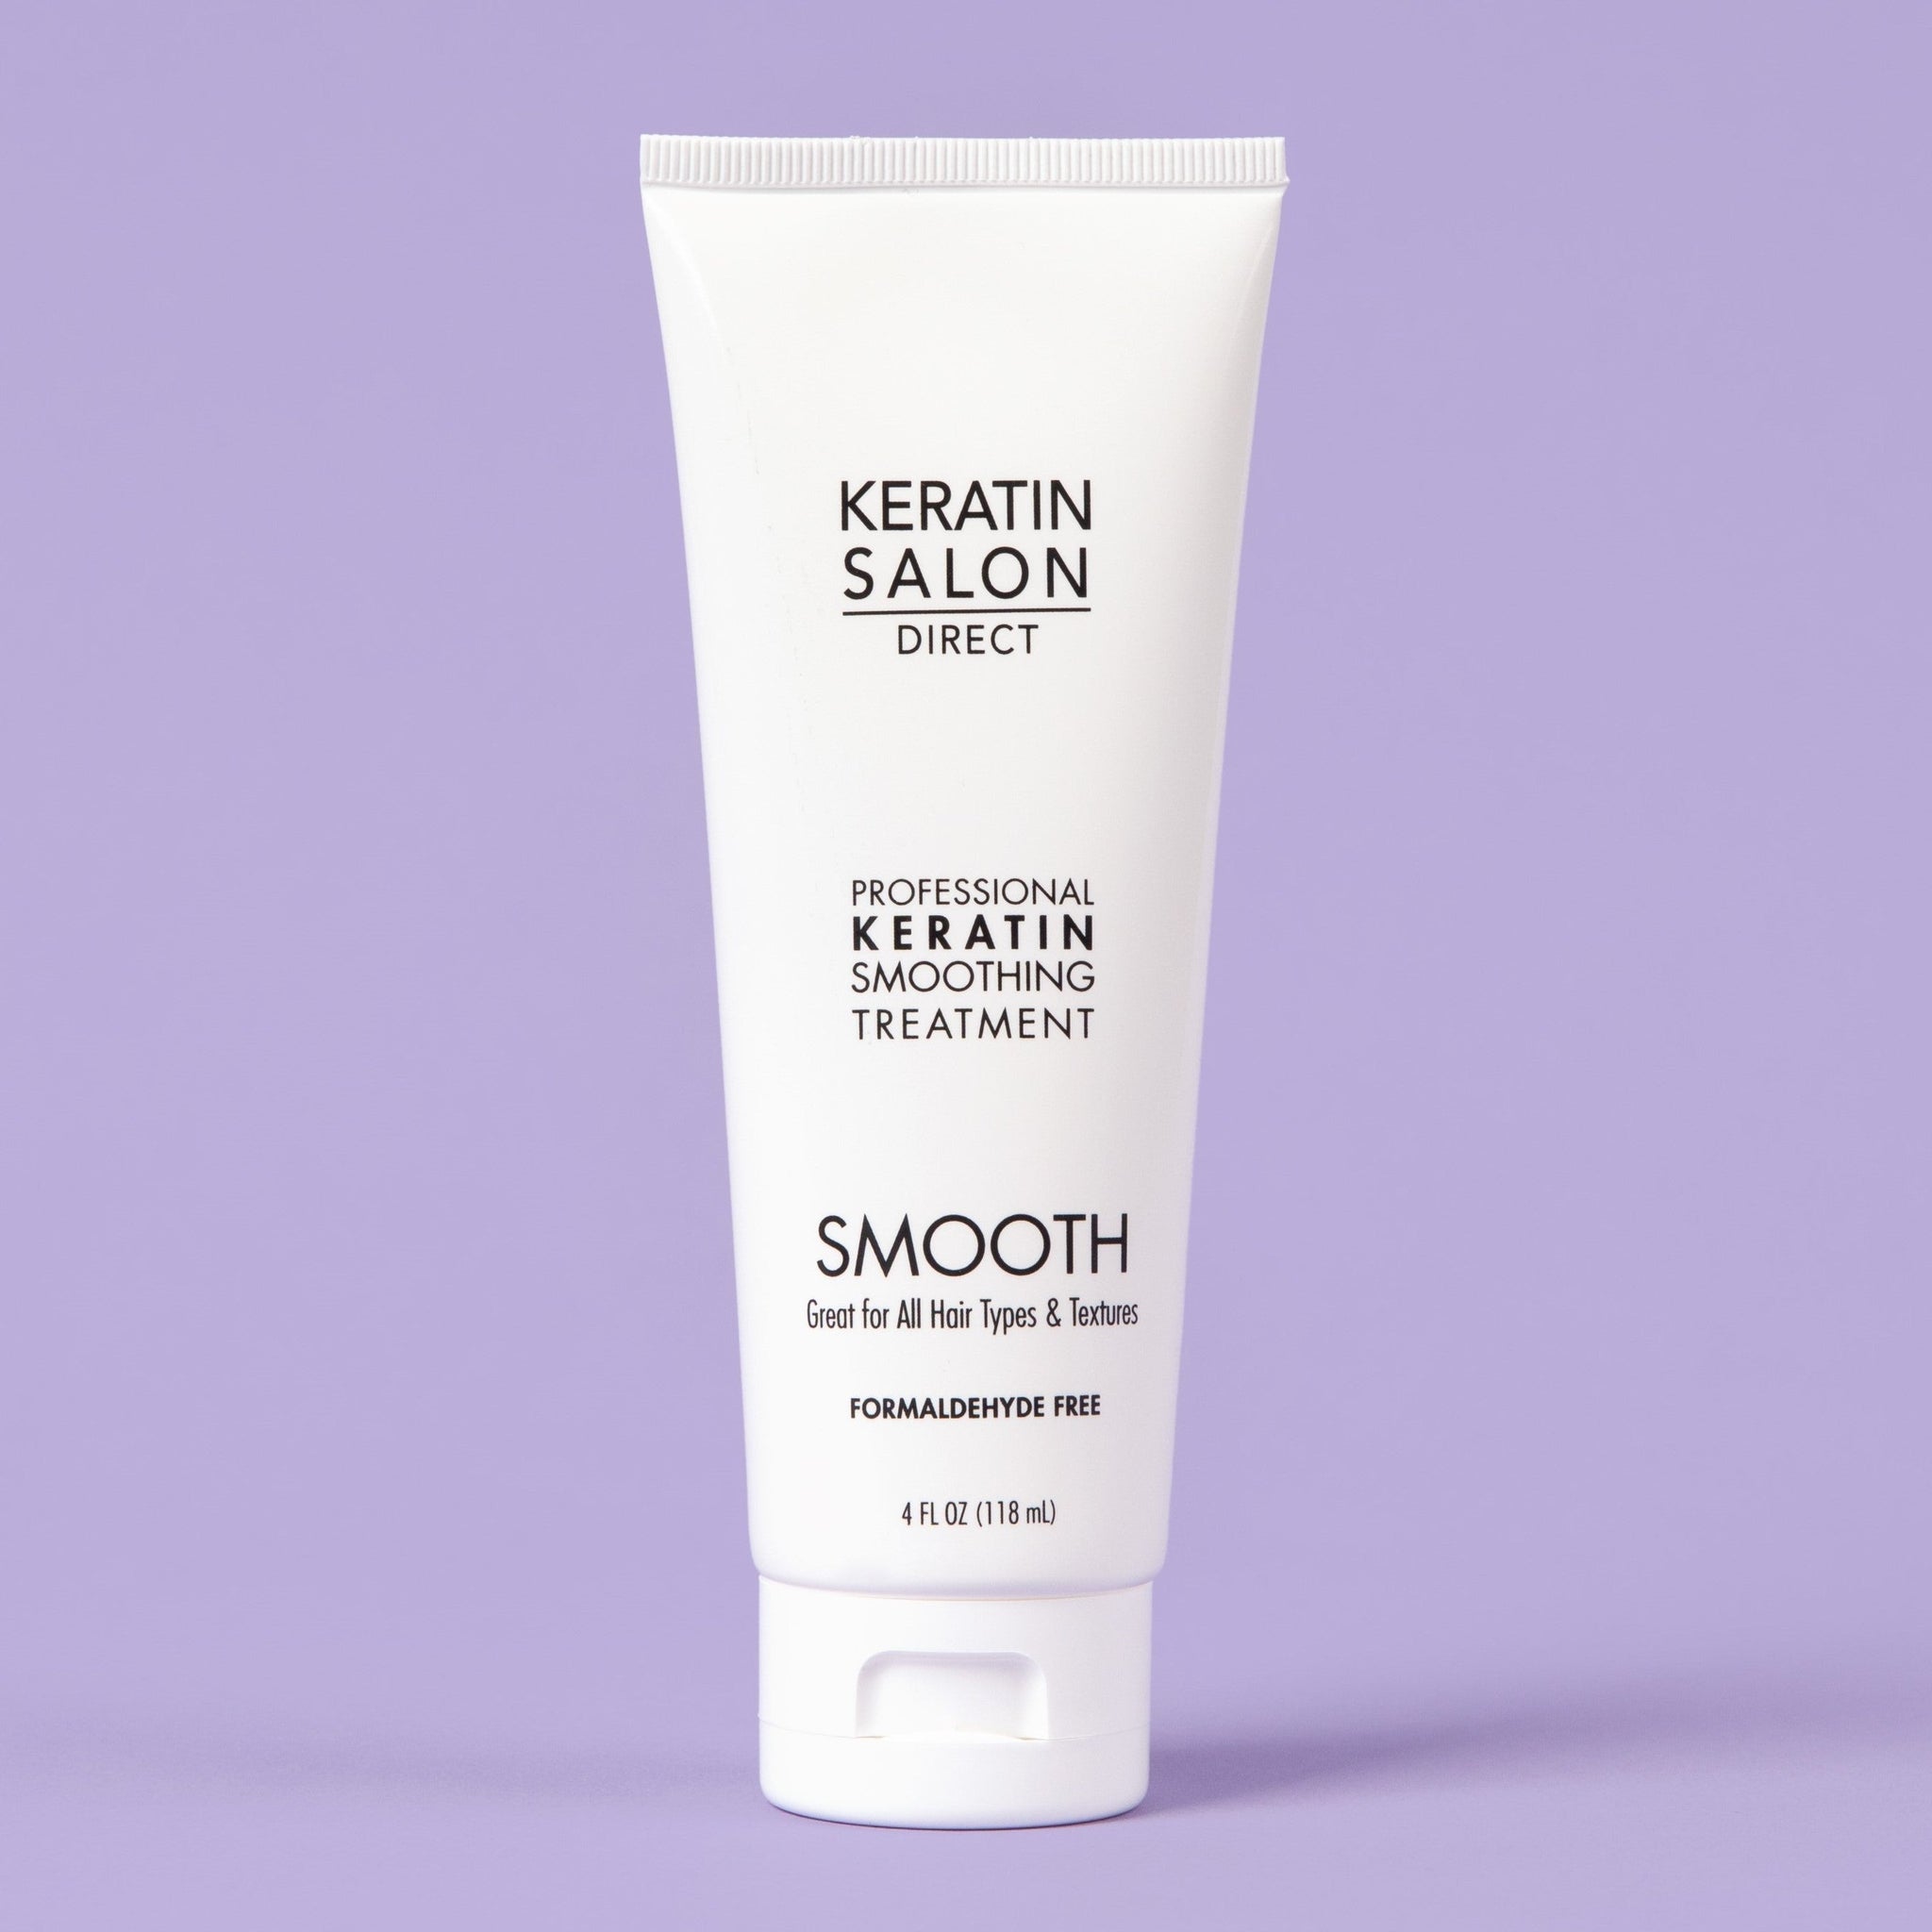 Keratin Treatment at home - SMOOTH - softer, straighter, frizz free hair –  Keratin Salon Direct